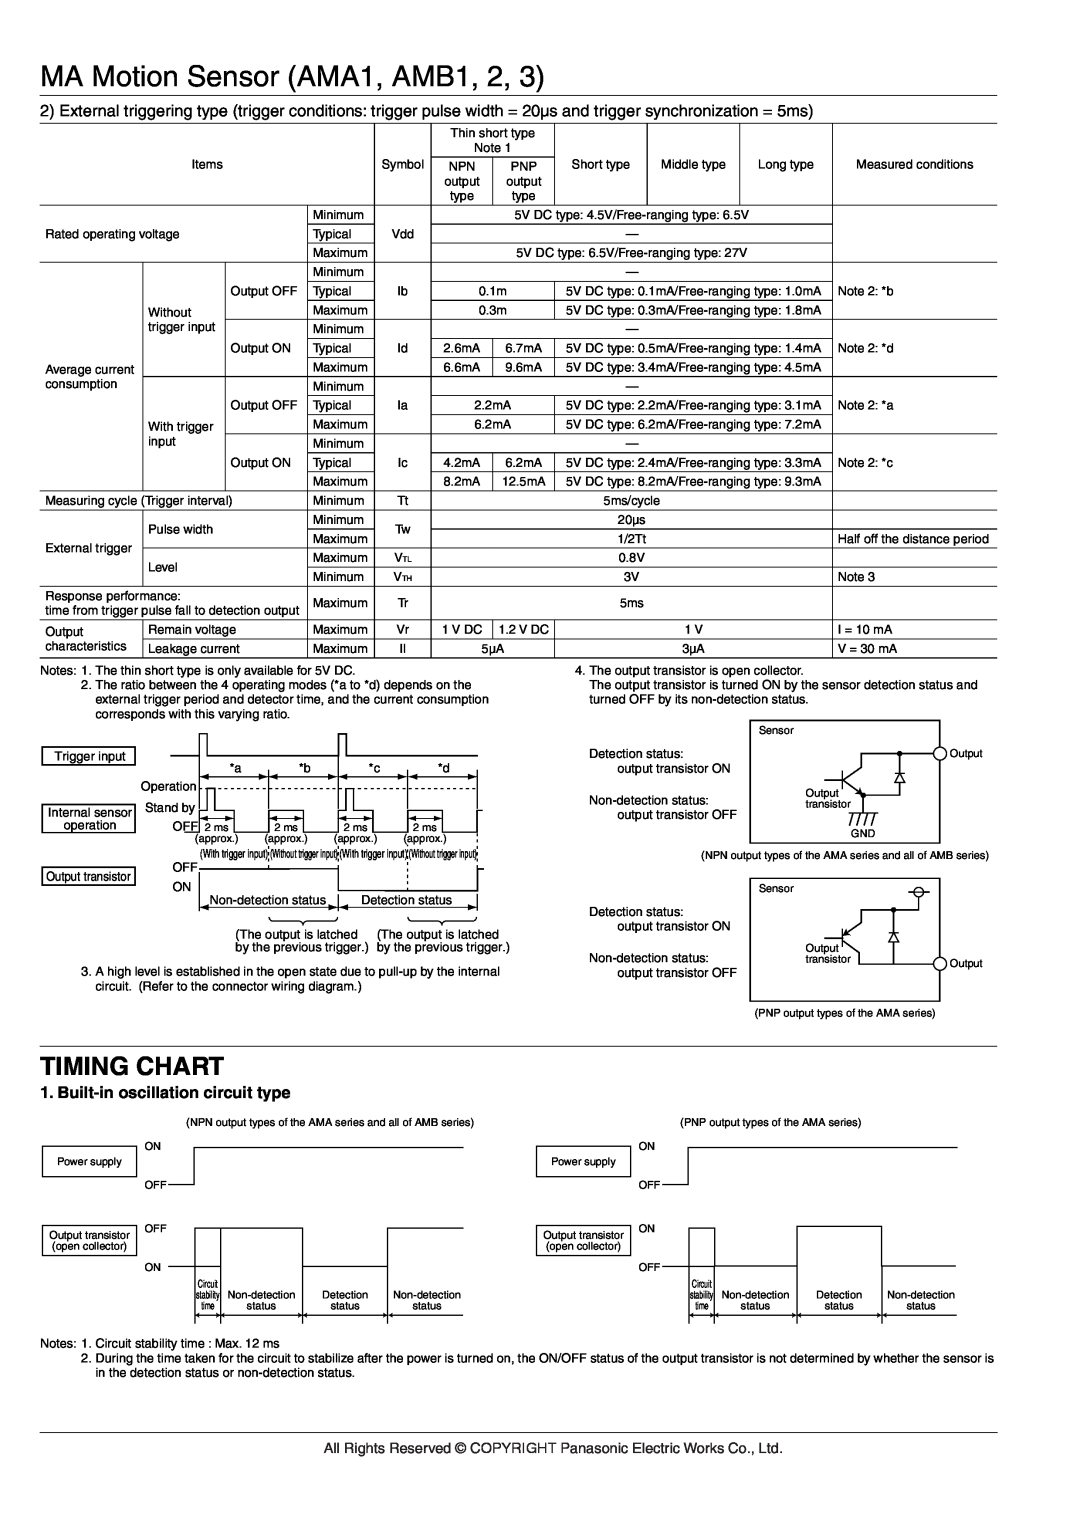 Panasonic Sensor Series manual Timing Chart, MA Motion Sensor AMA1, AMB1, Built-inoscillation circuit type 